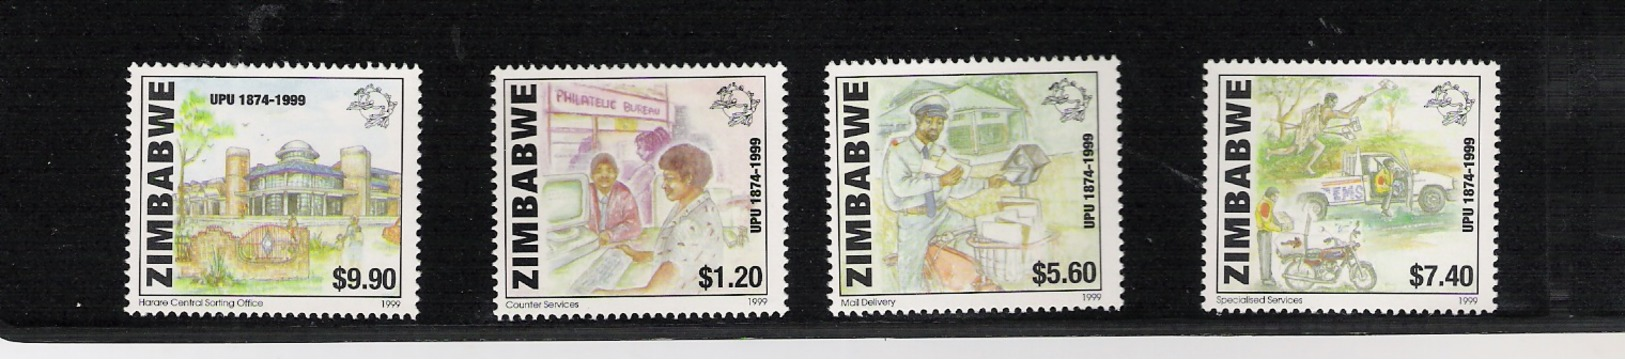 ZIMBABWE, 1999 UPU Centenary 4v  MNH - Zimbabwe (1980-...)